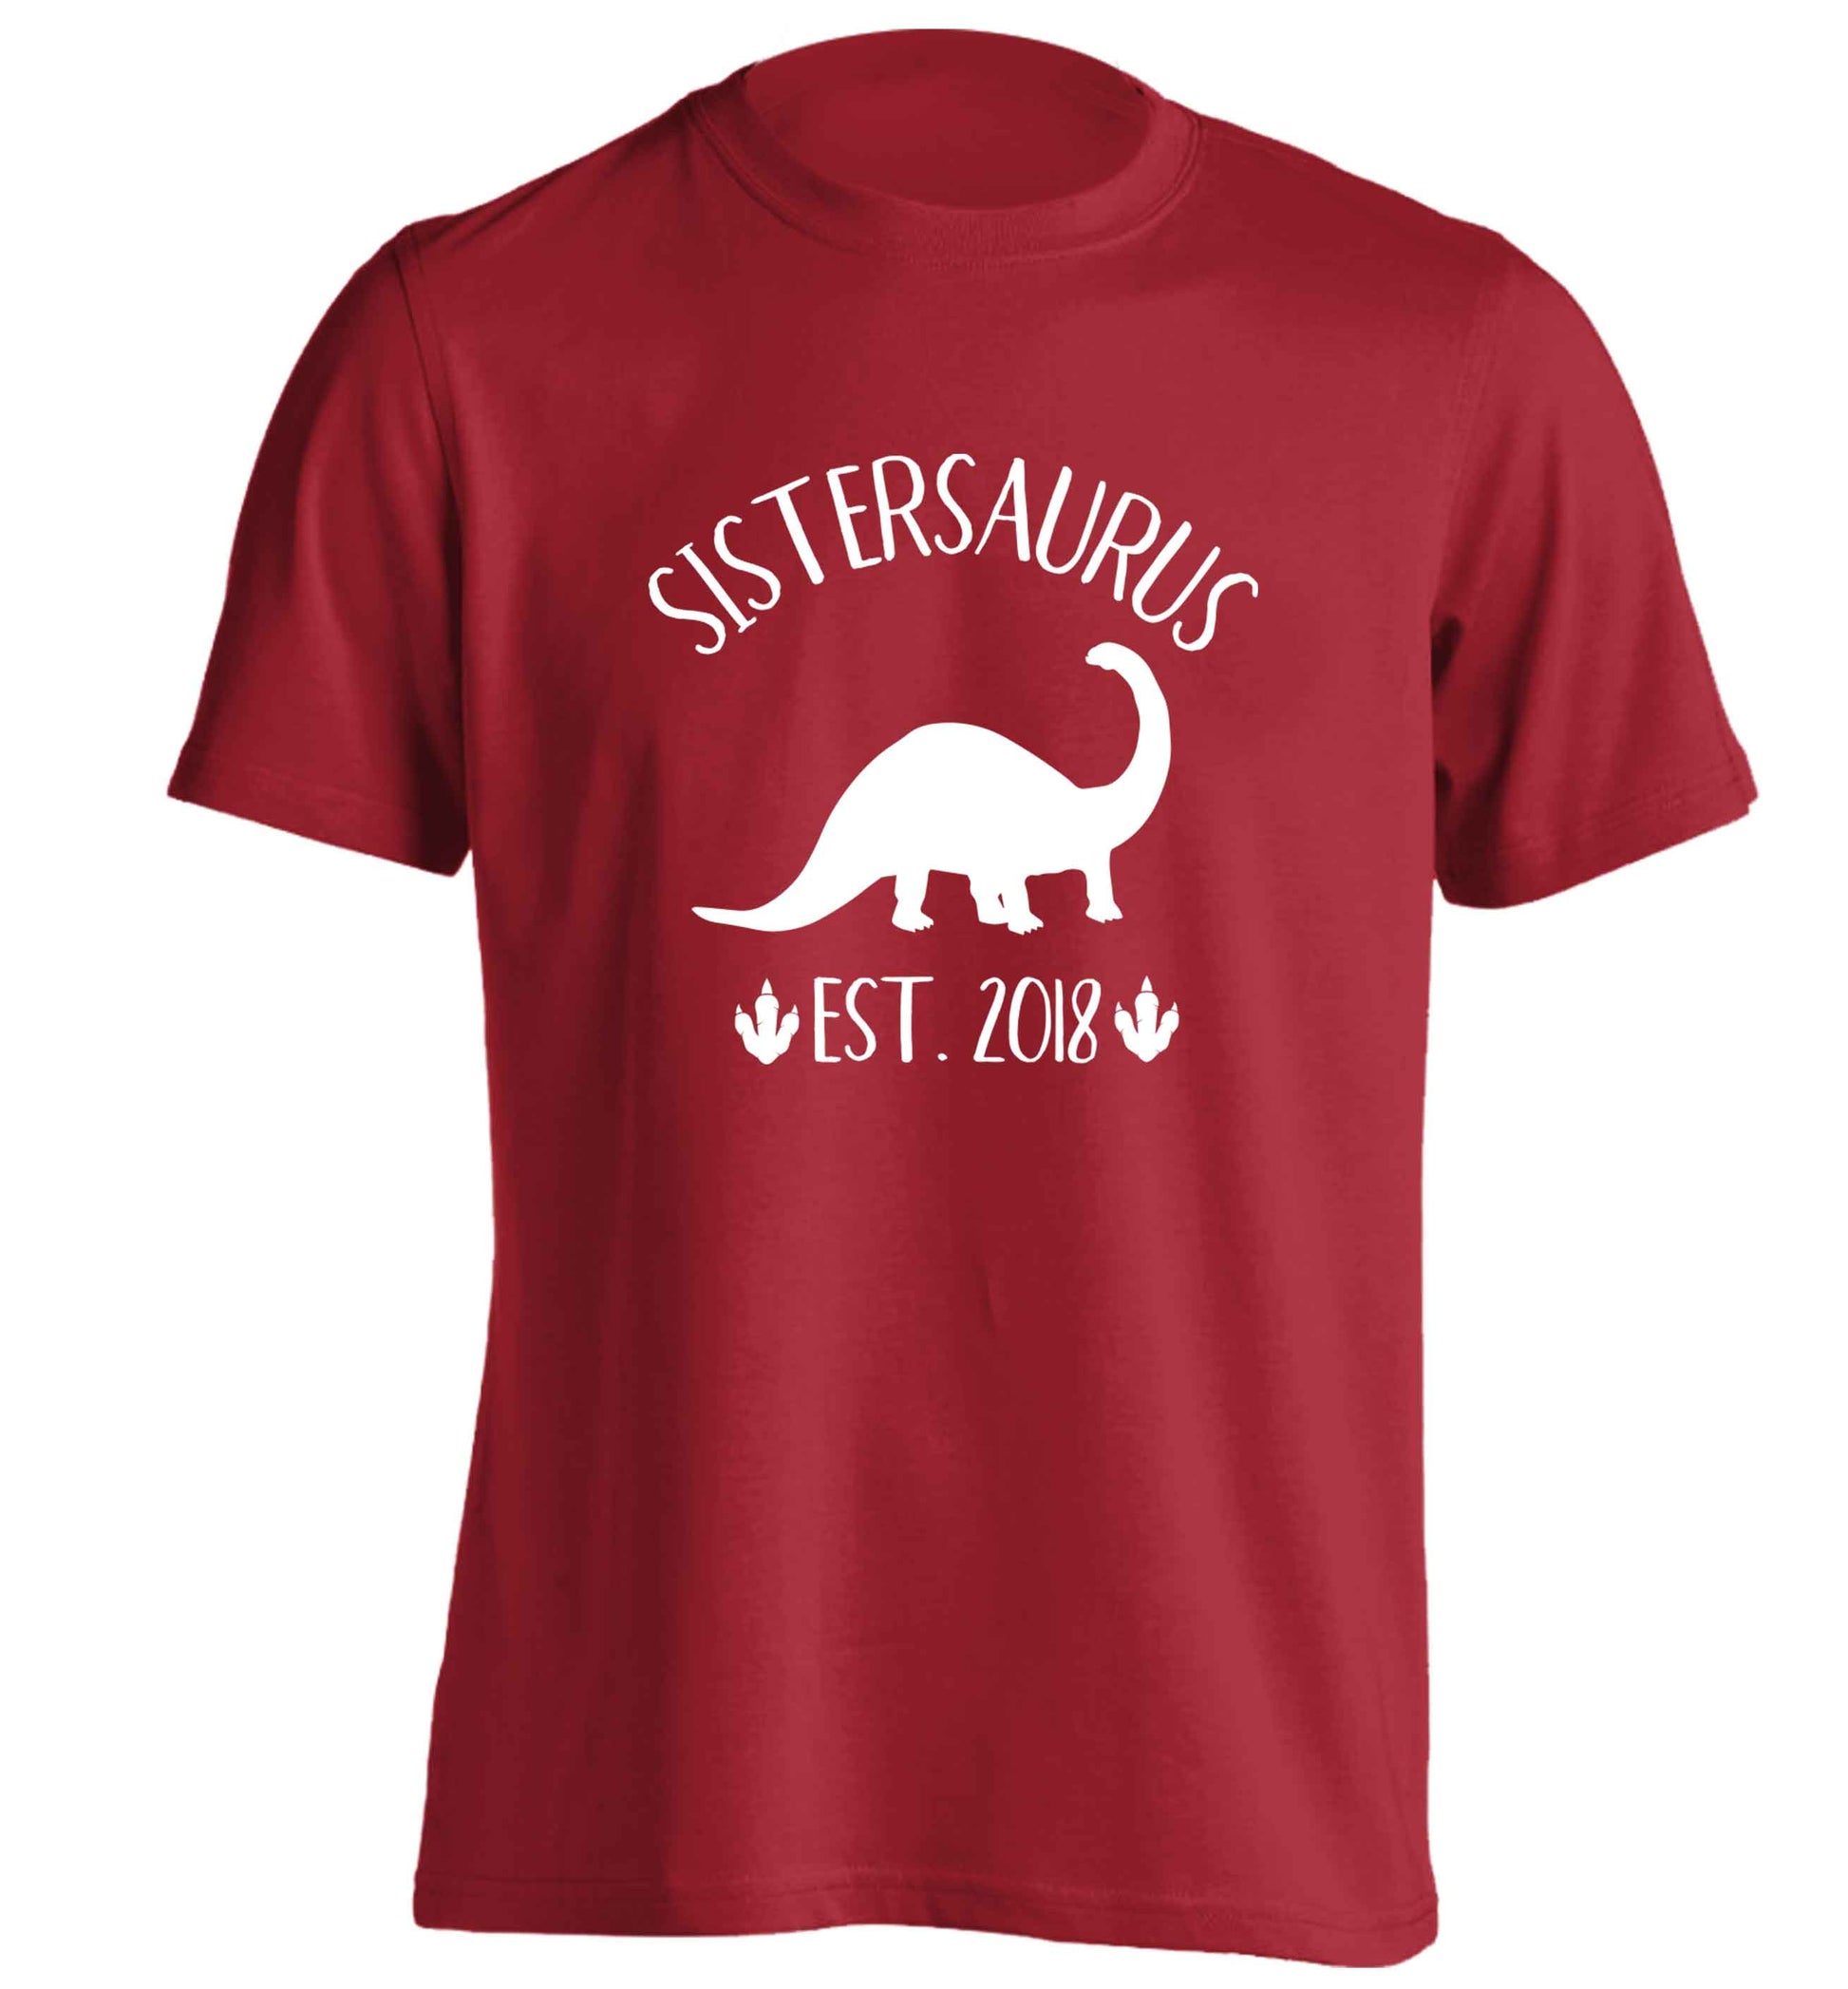 Personalised sistersaurus since (custom date) adults unisex red Tshirt 2XL